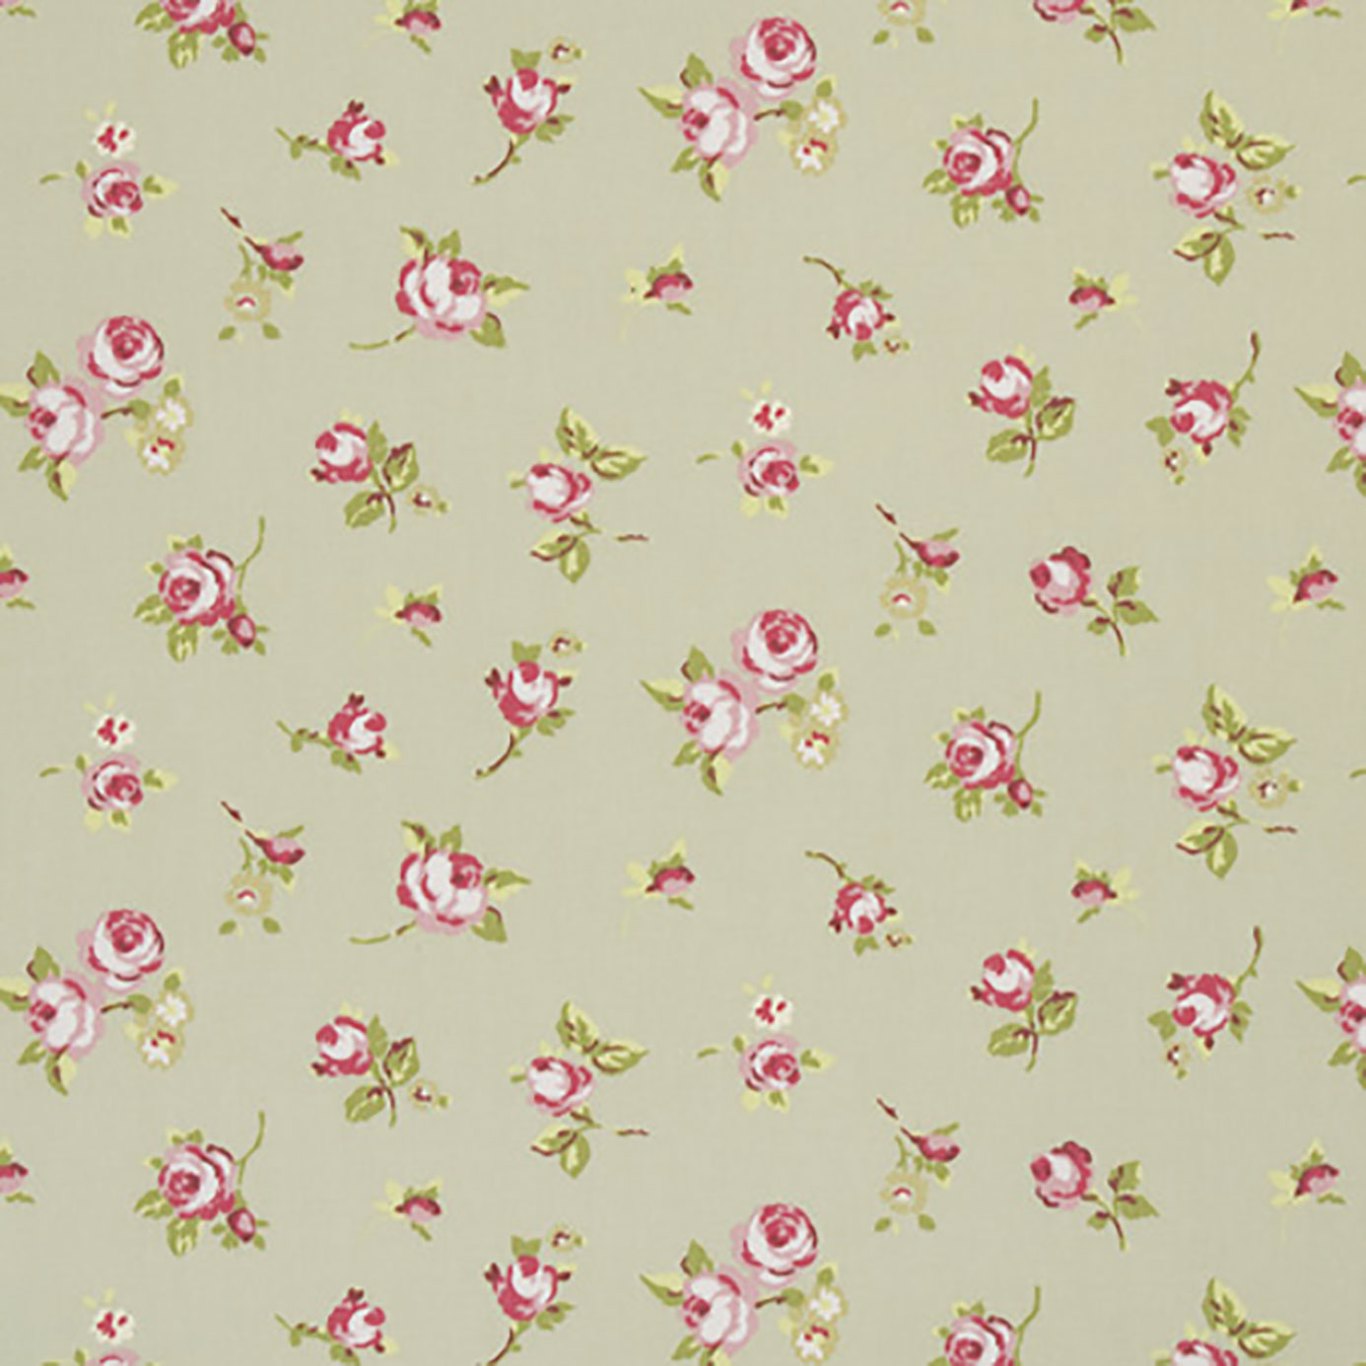 Rosebud Sage Fabric by STG